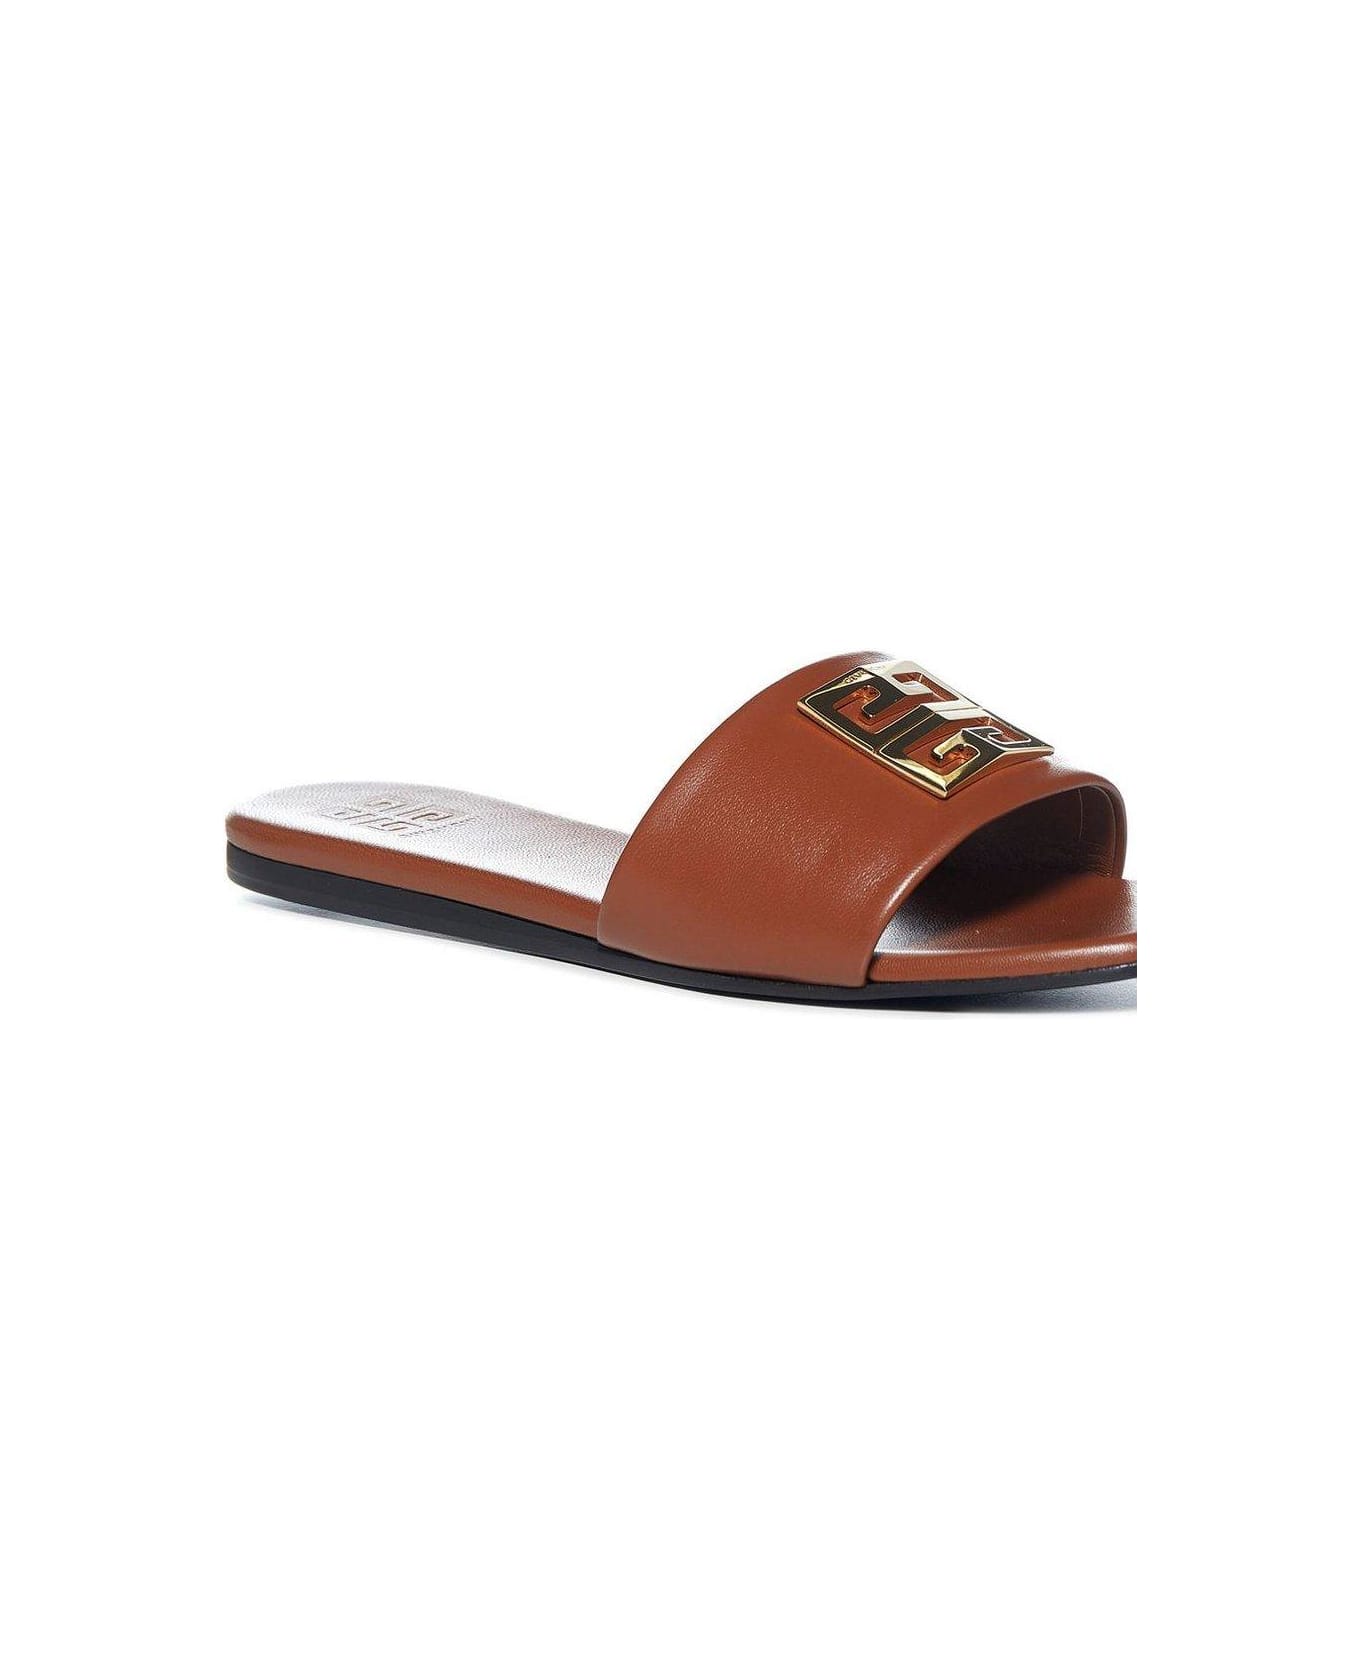 Givenchy 4g Motif Flat Sandals - BROWN